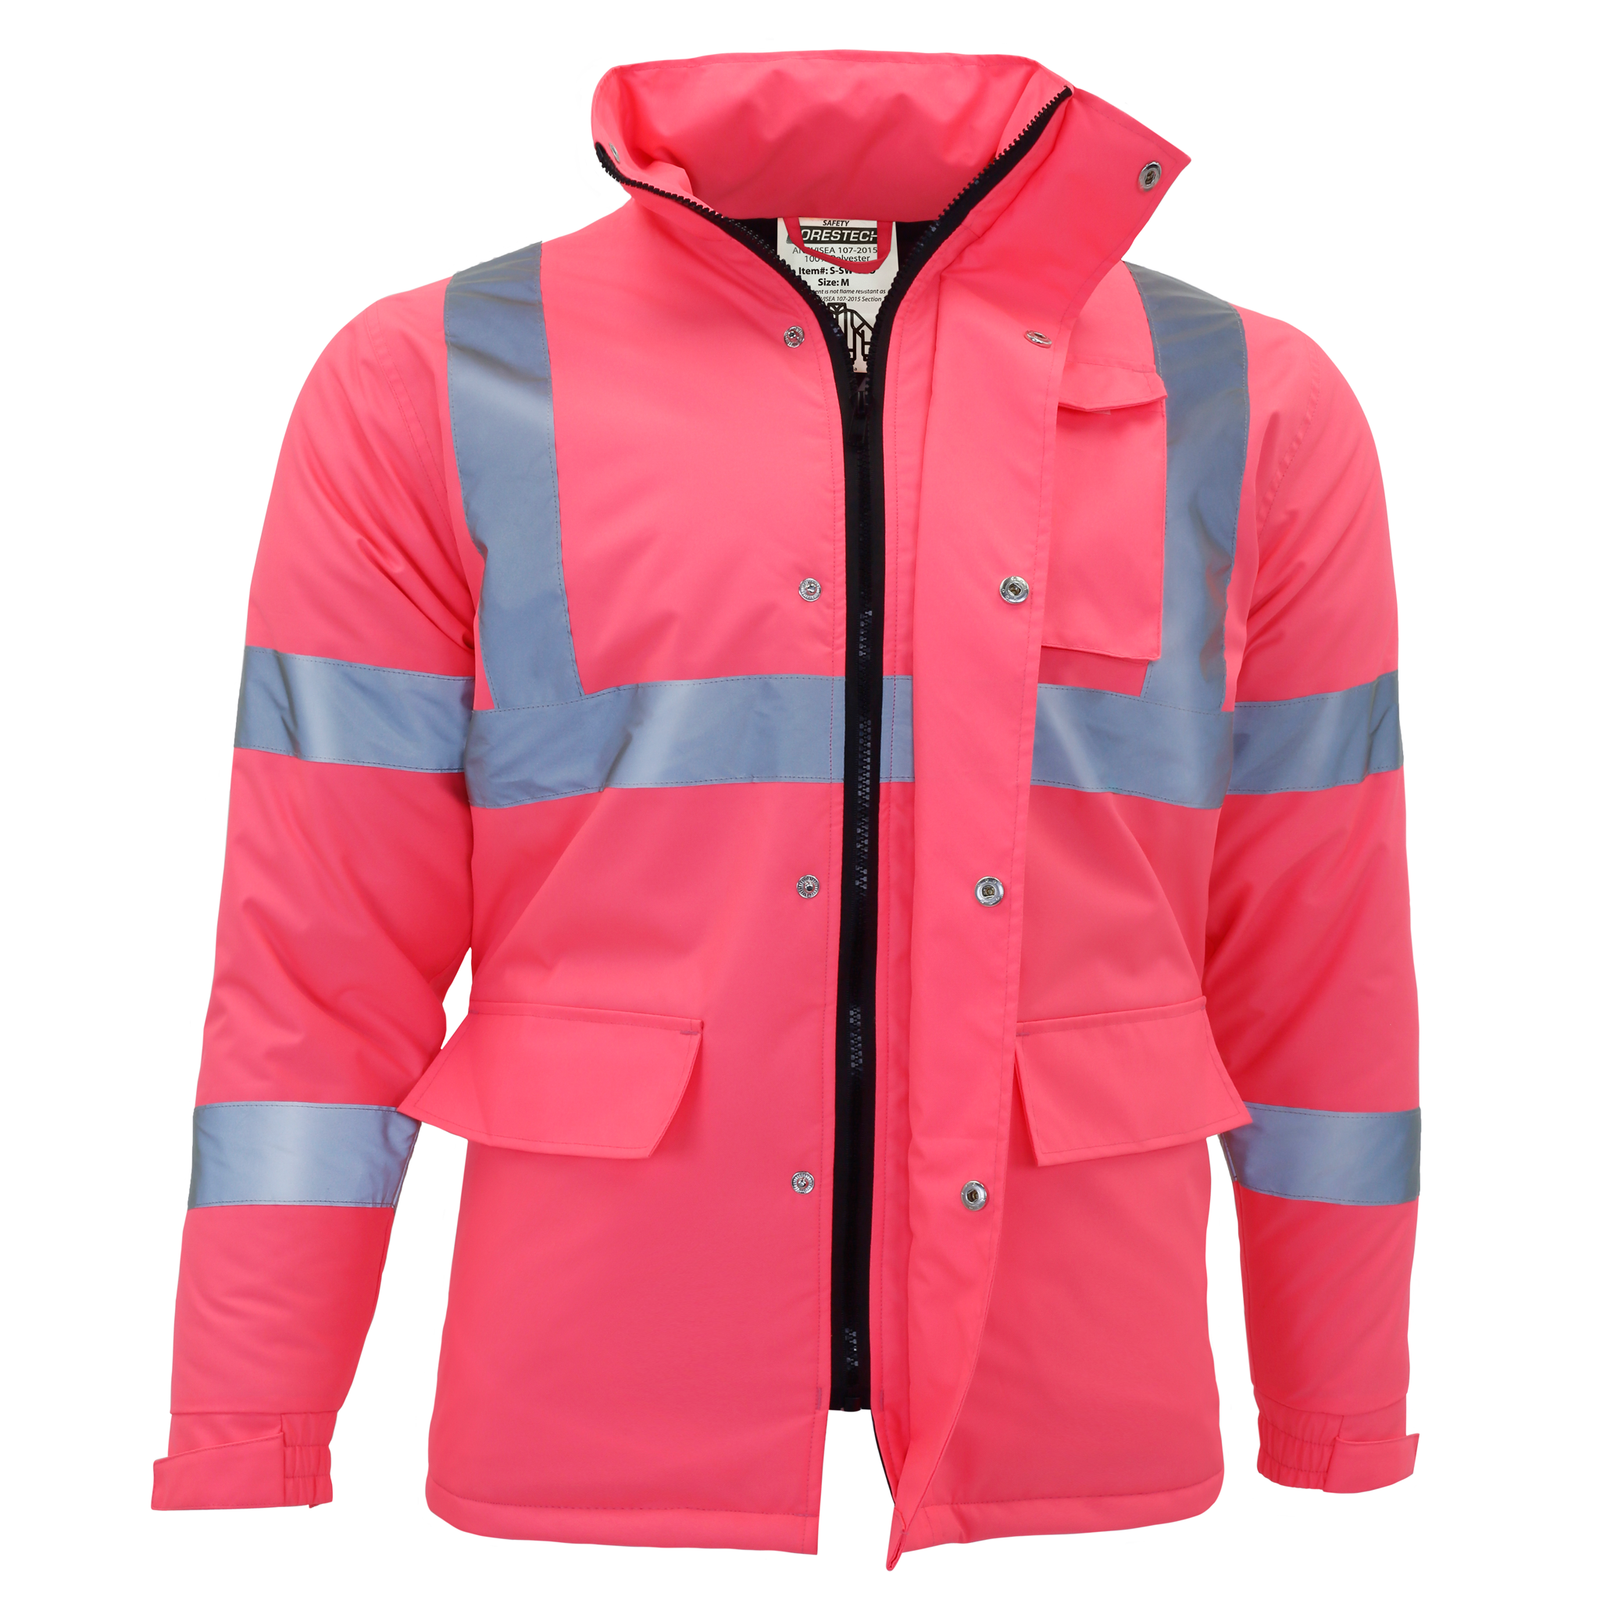 VENDACE Safety Jacket Hi Vis Reflective Winter Jackets for Men